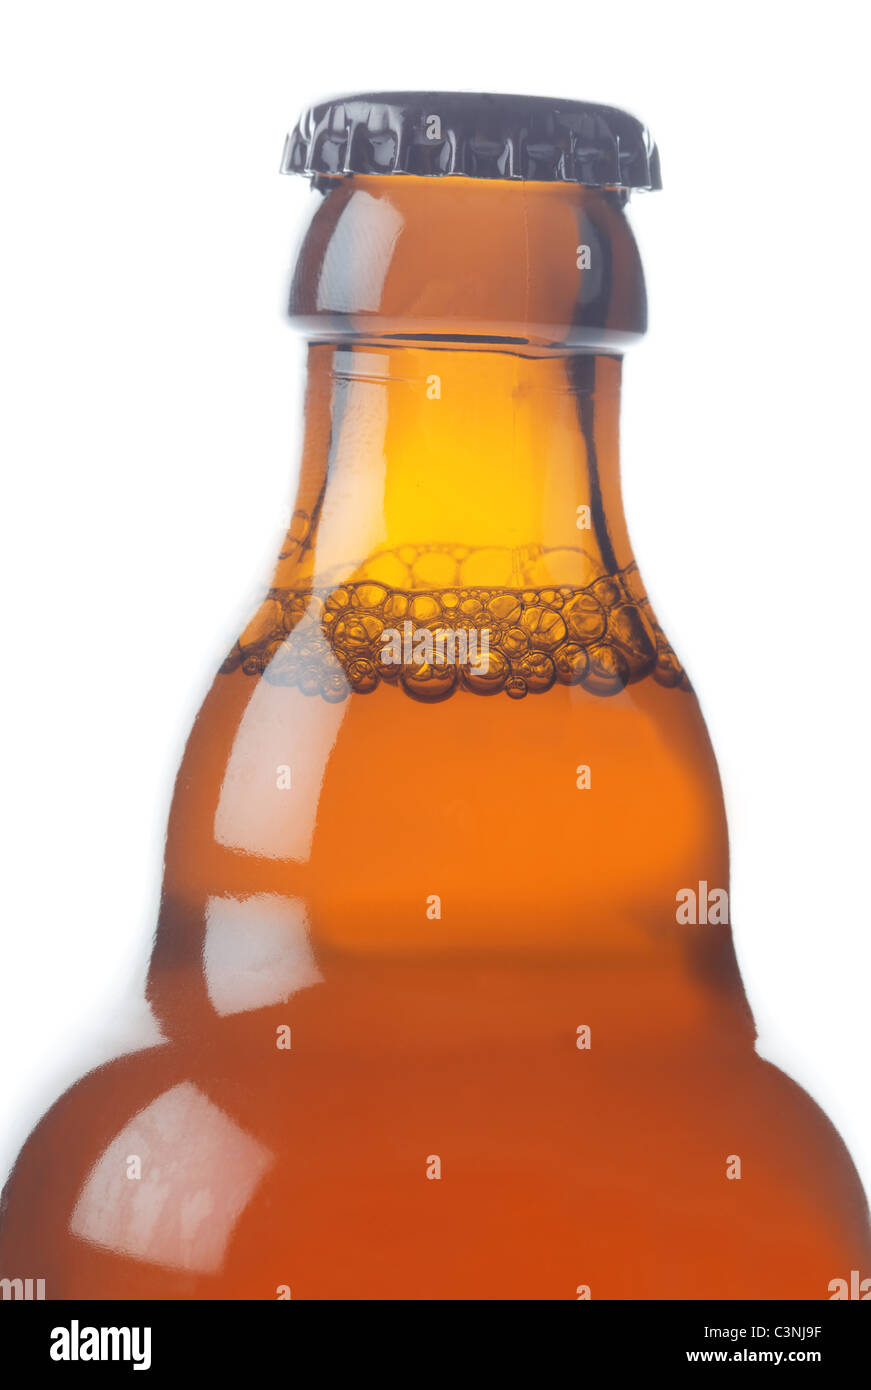 Beer bottle isolated on white background Stock Photo